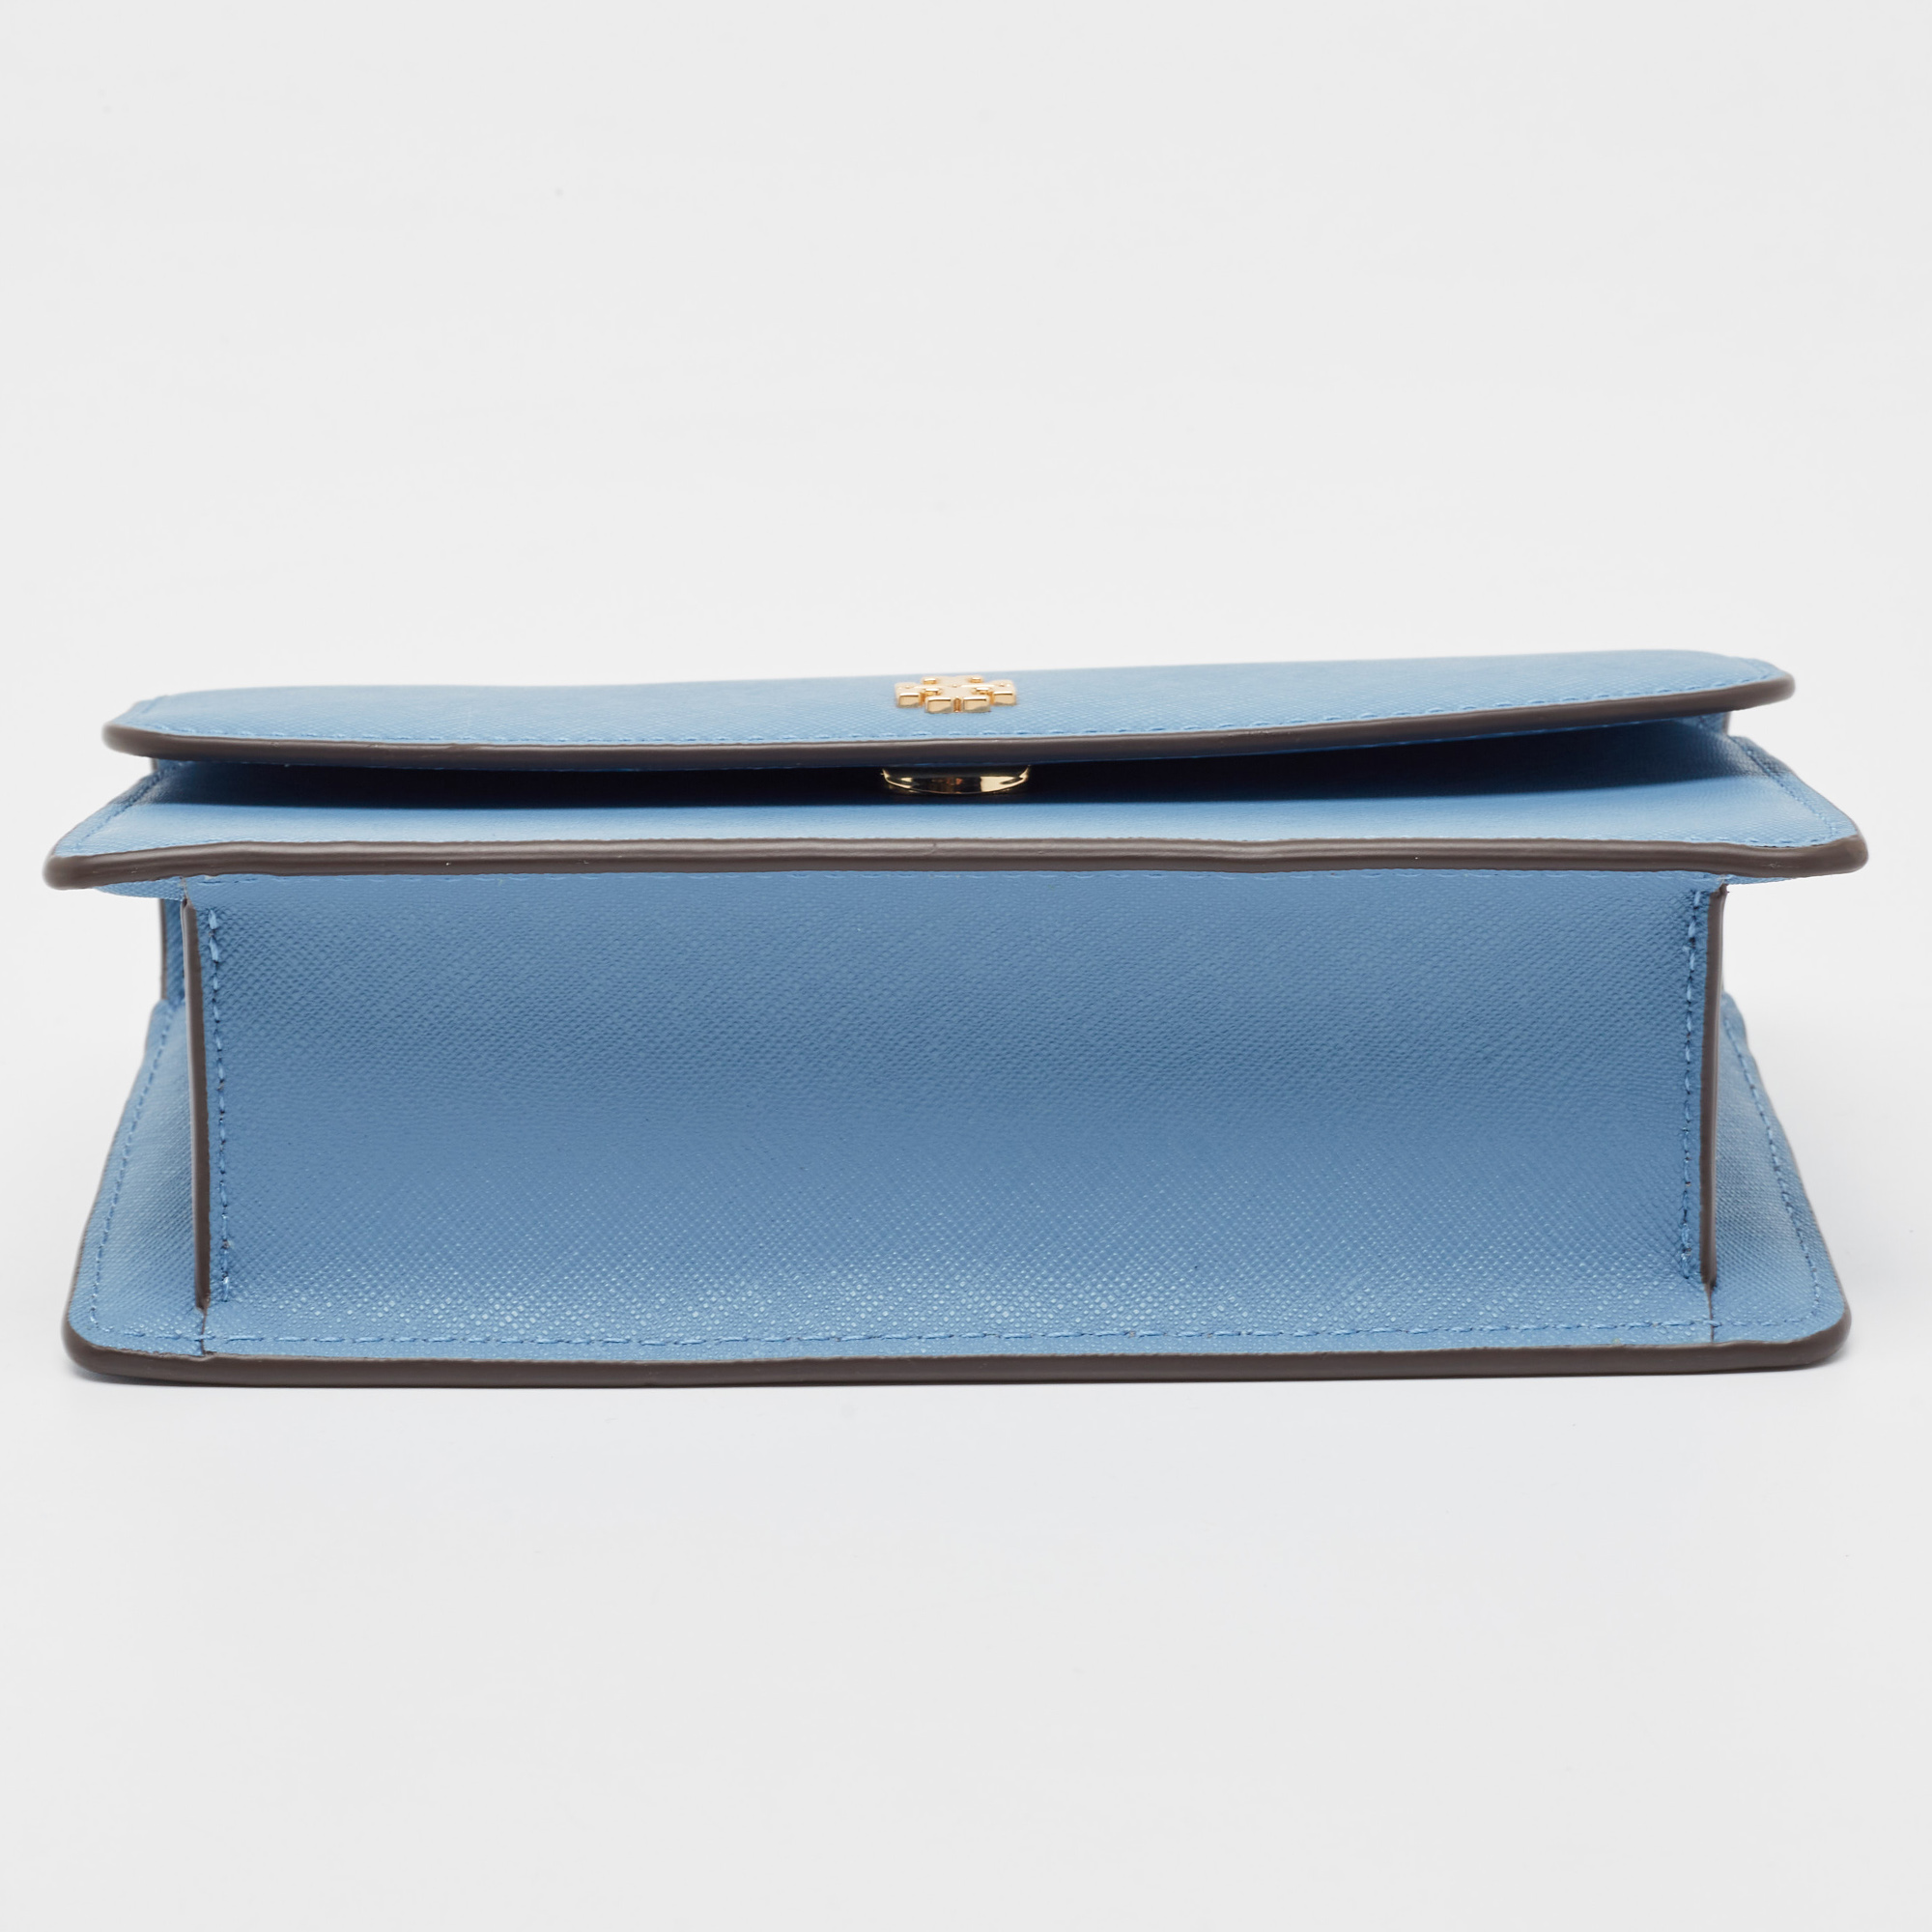 Tory Burch Light Blue Saffiano Leather Mini Emerson Top Handle Bag